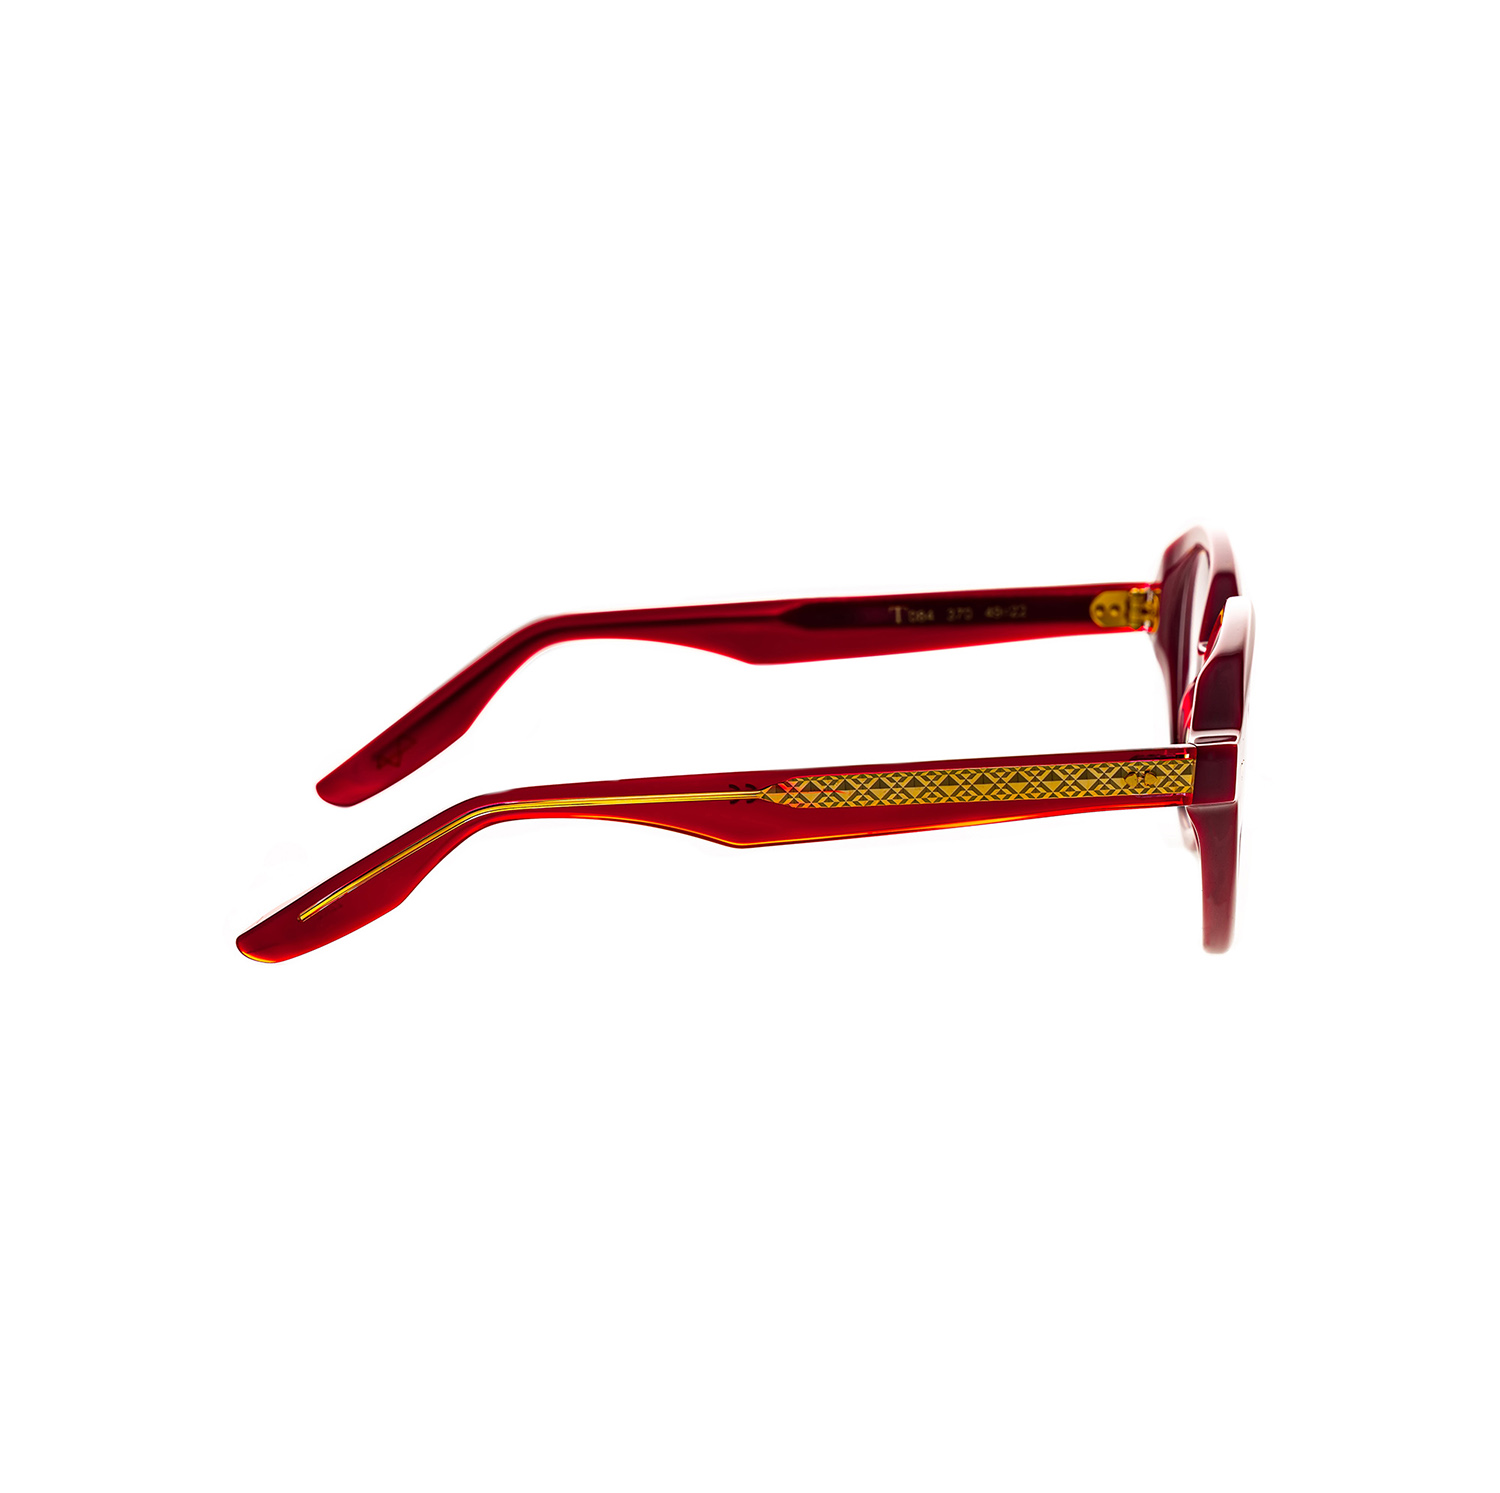 Costantino Toffoli Glasses model T084